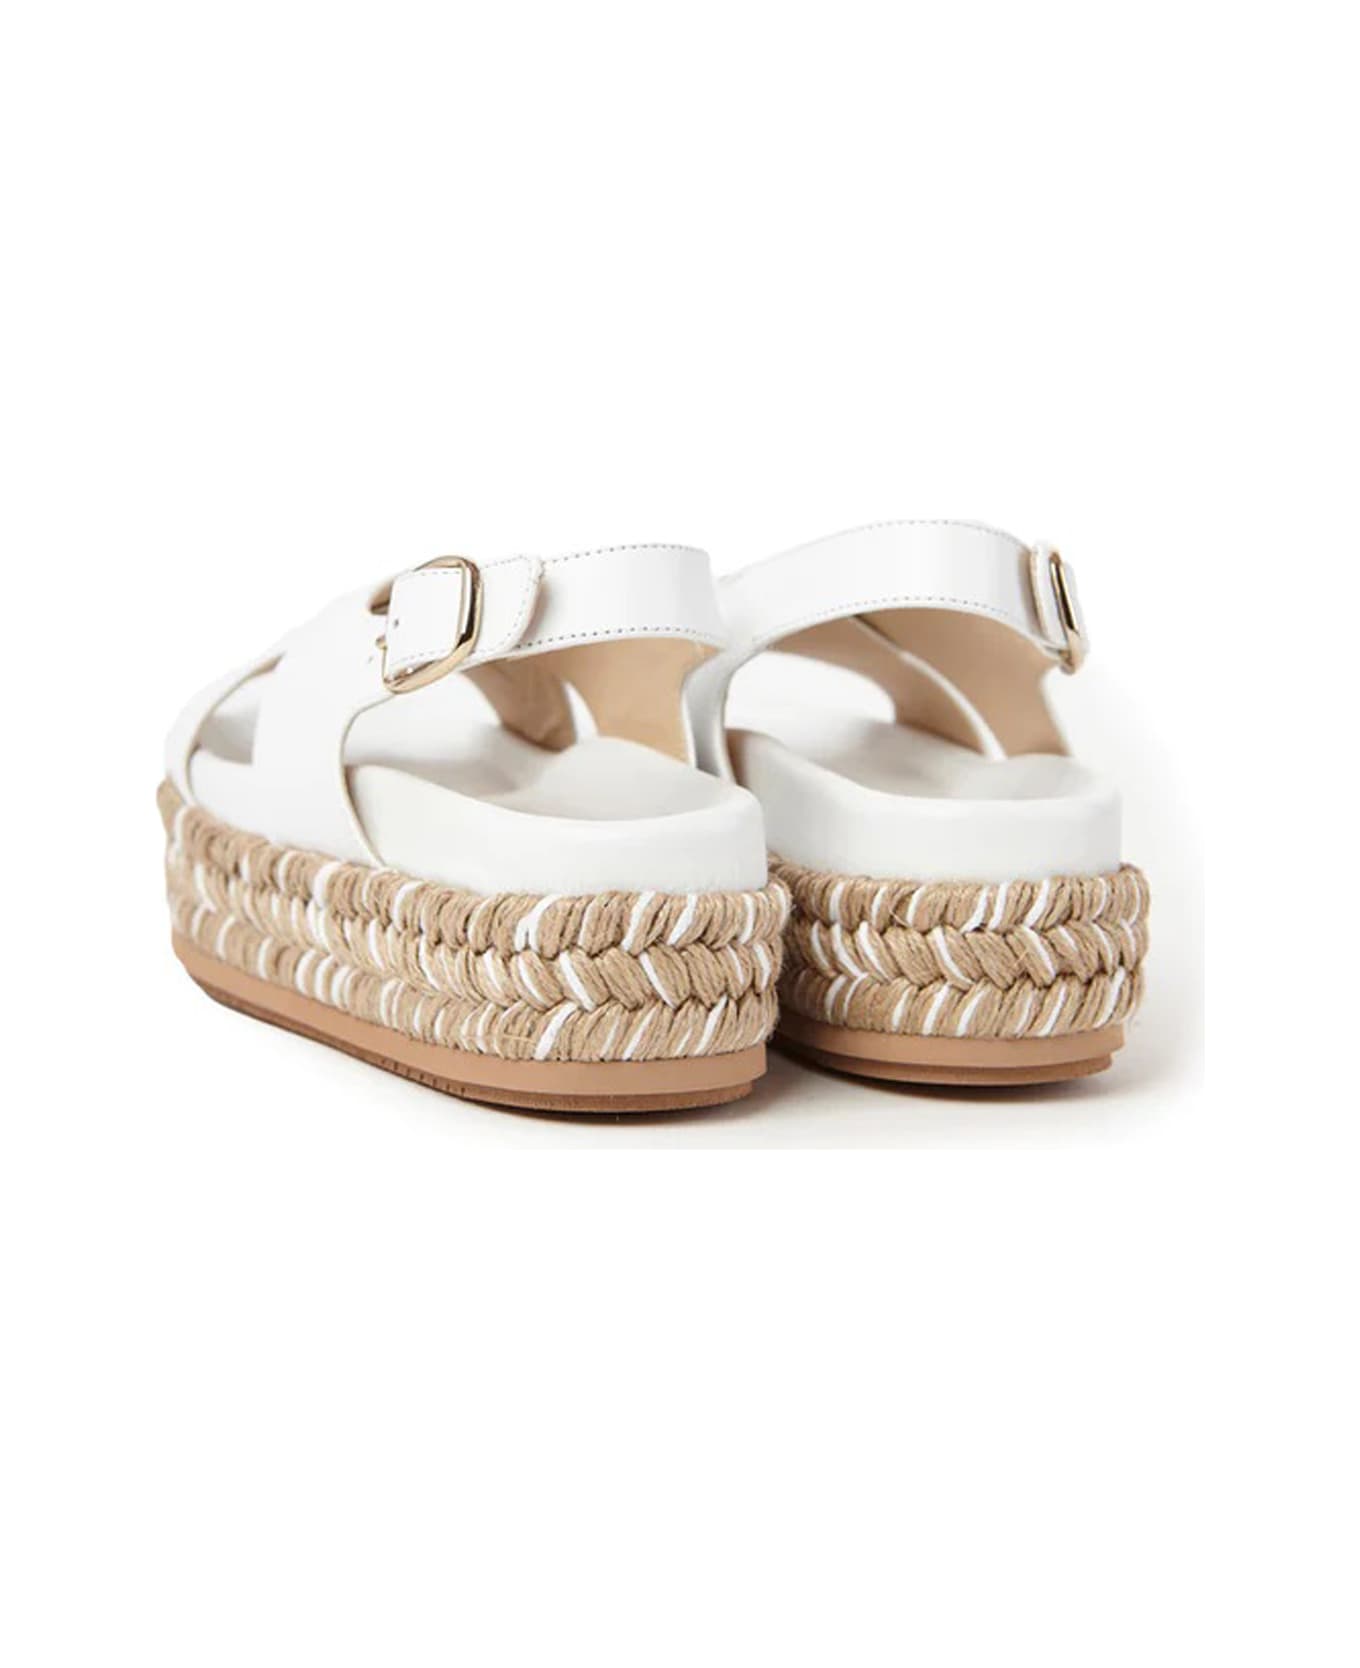 Paloma Barceló Flat Sandals - White